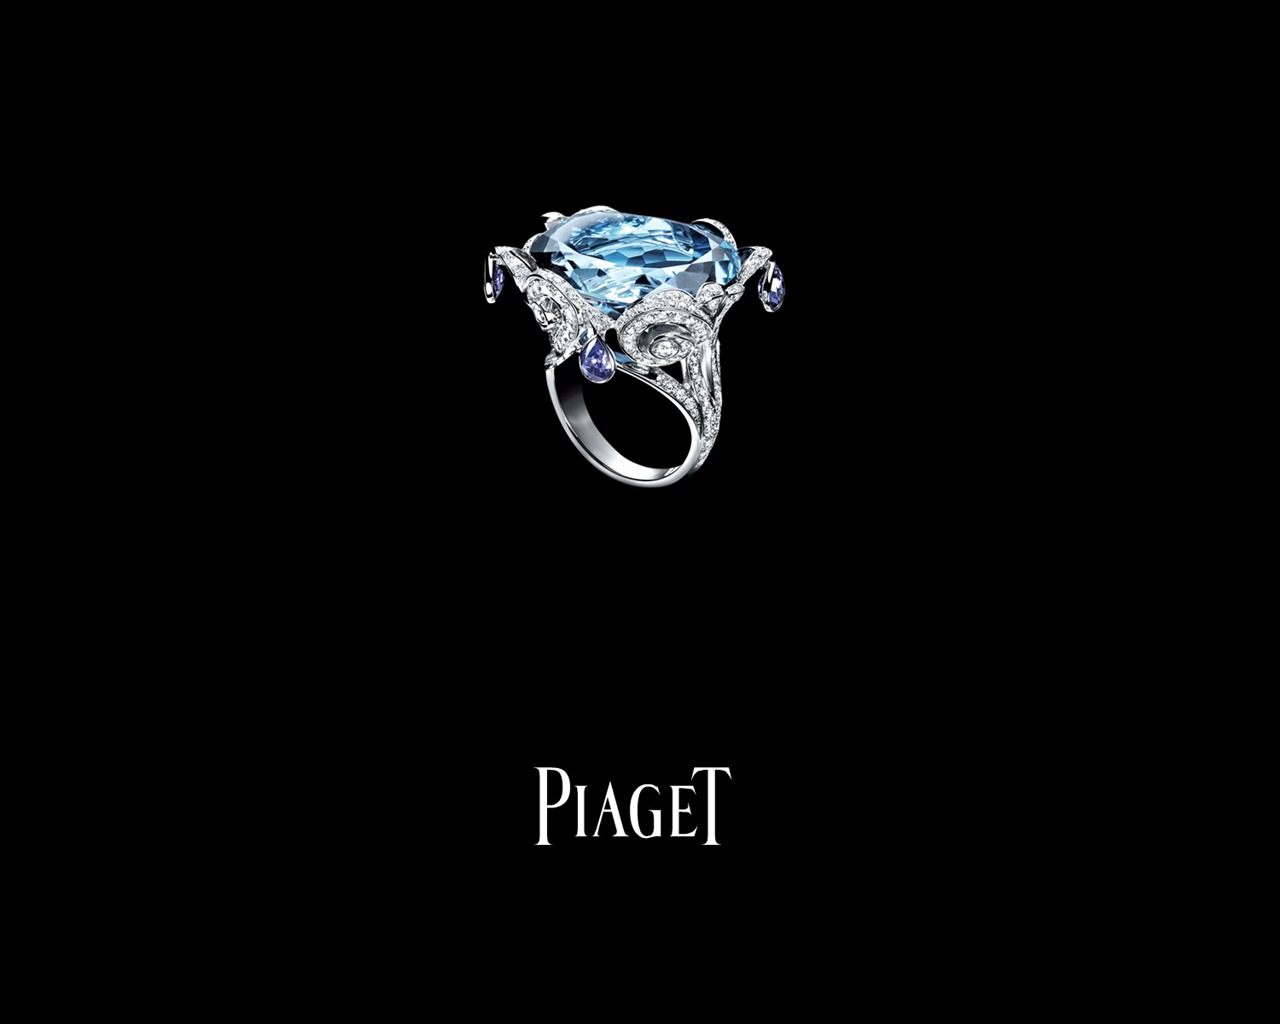 Piaget diamond jewelry wallpaper (3) #2 - 1280x1024